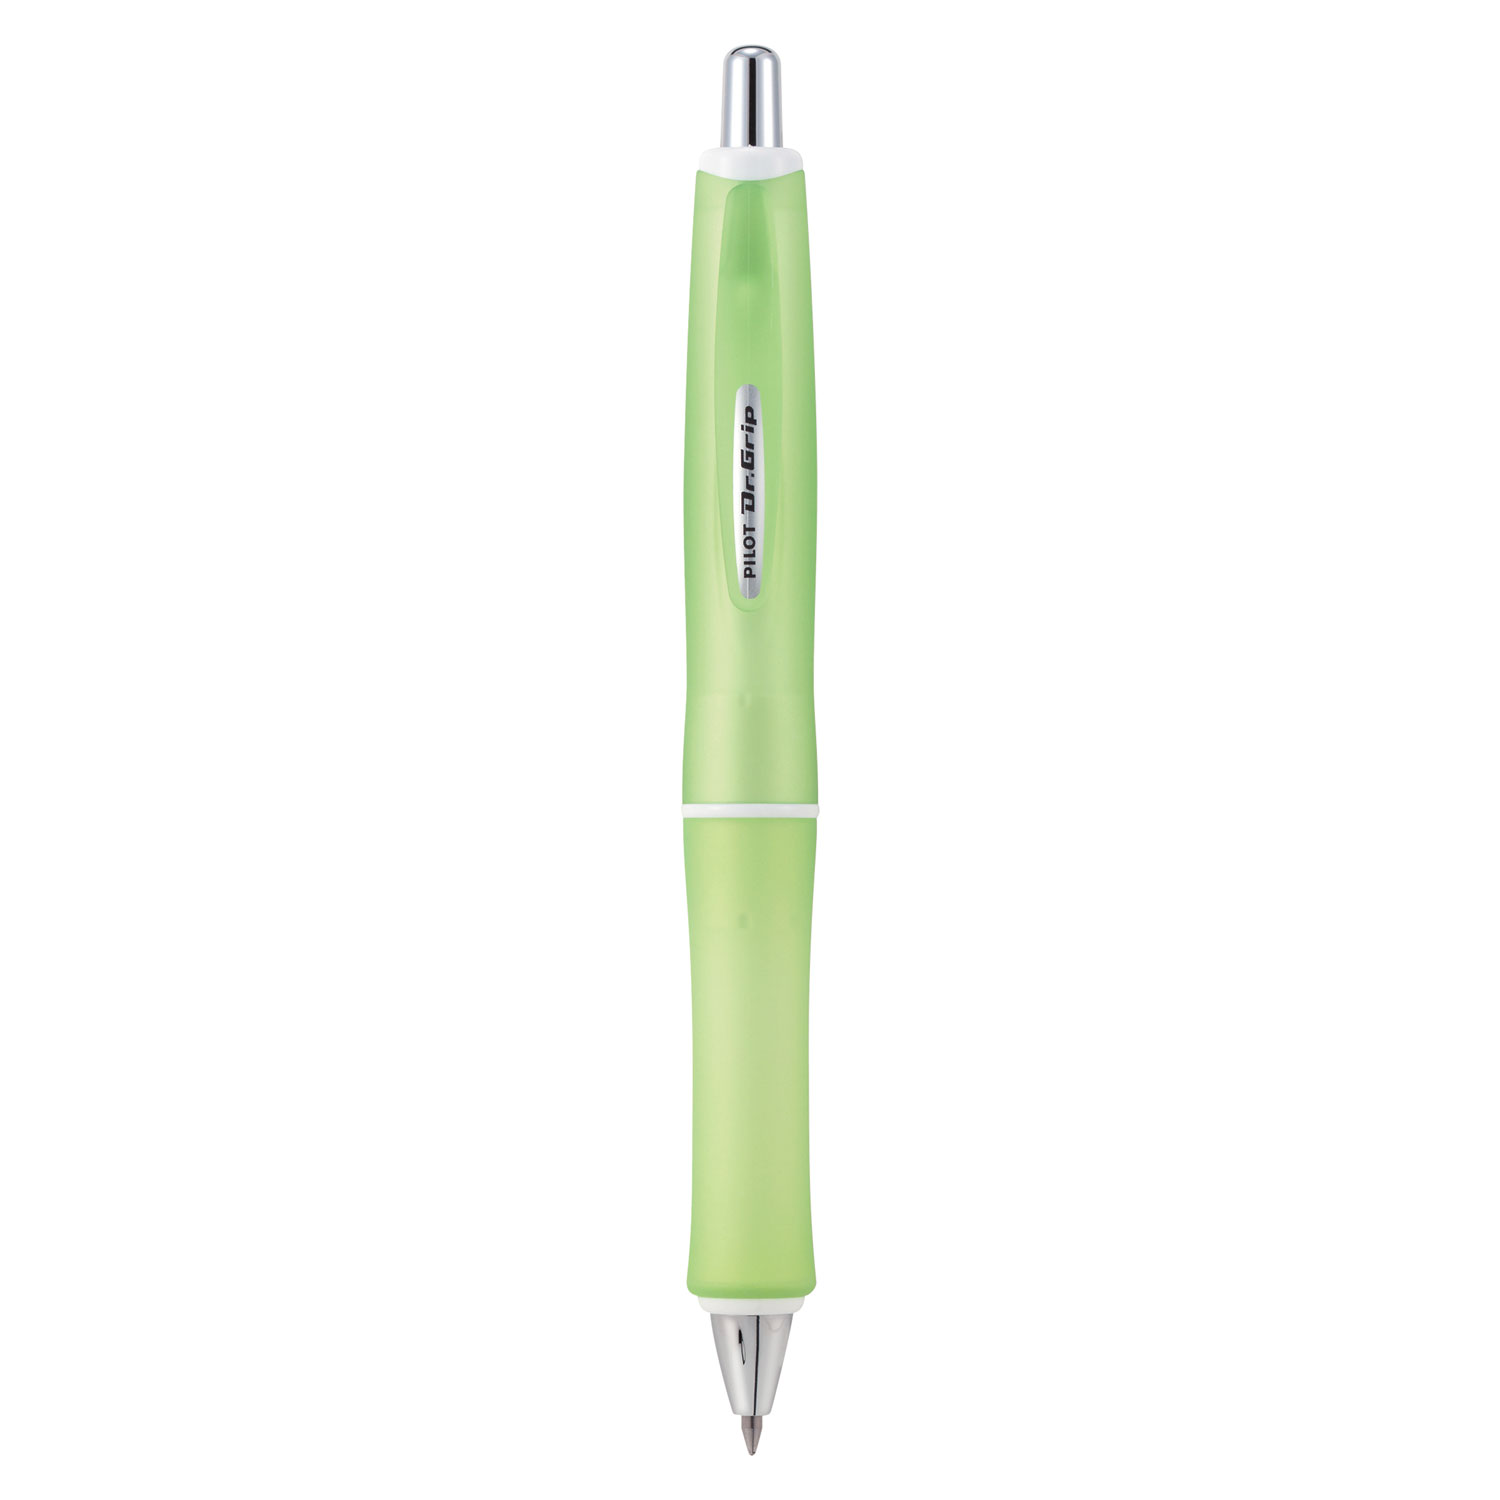  Pilot 36251 Dr. Grip Frosted Retractable Ballpoint Pen, 1mm, Black Ink, Green Barrel (PIL36251) 